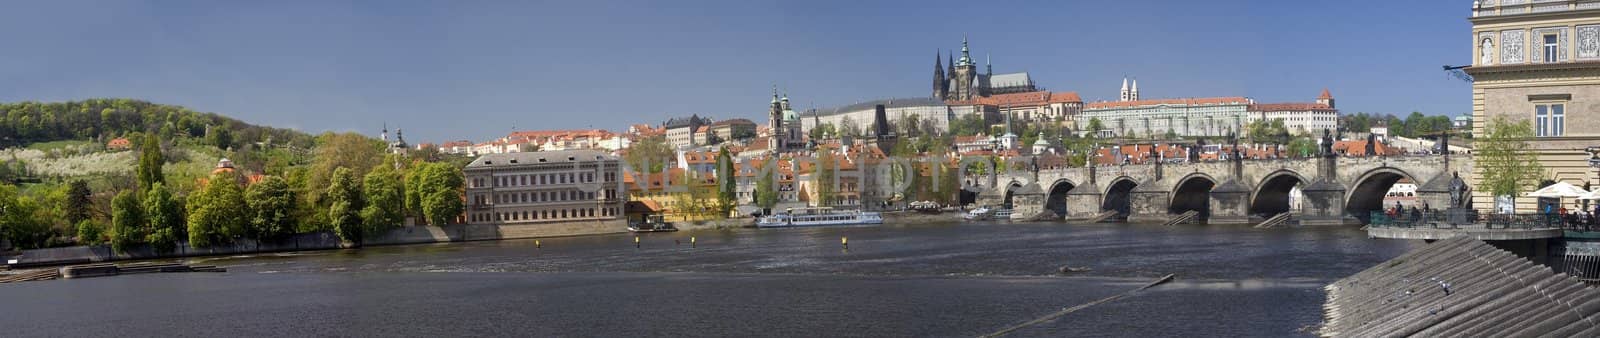 Prague castle panorama  by orson